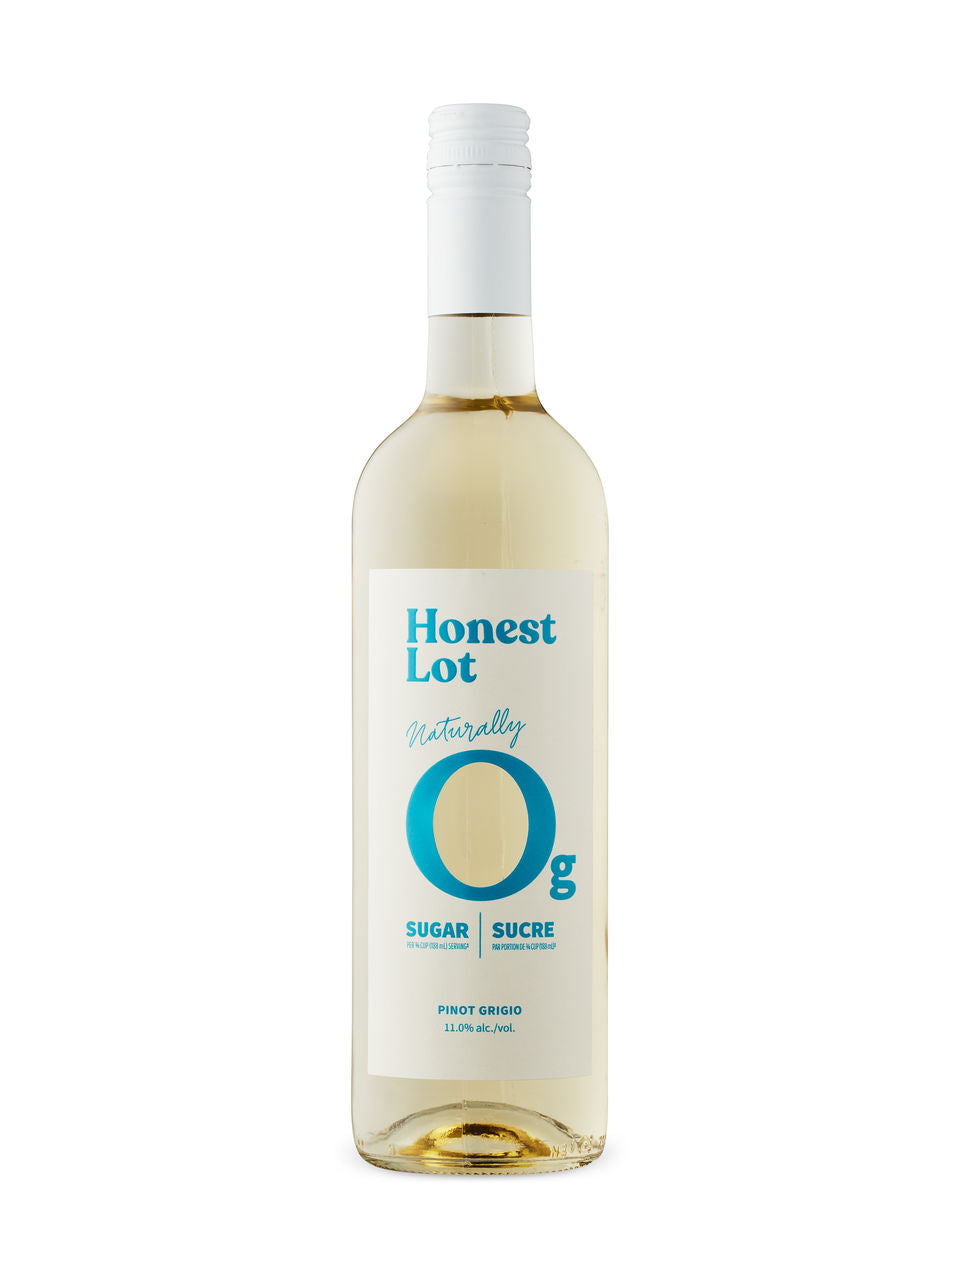 Honest Lot Pinot Grigio  750 ml bottle